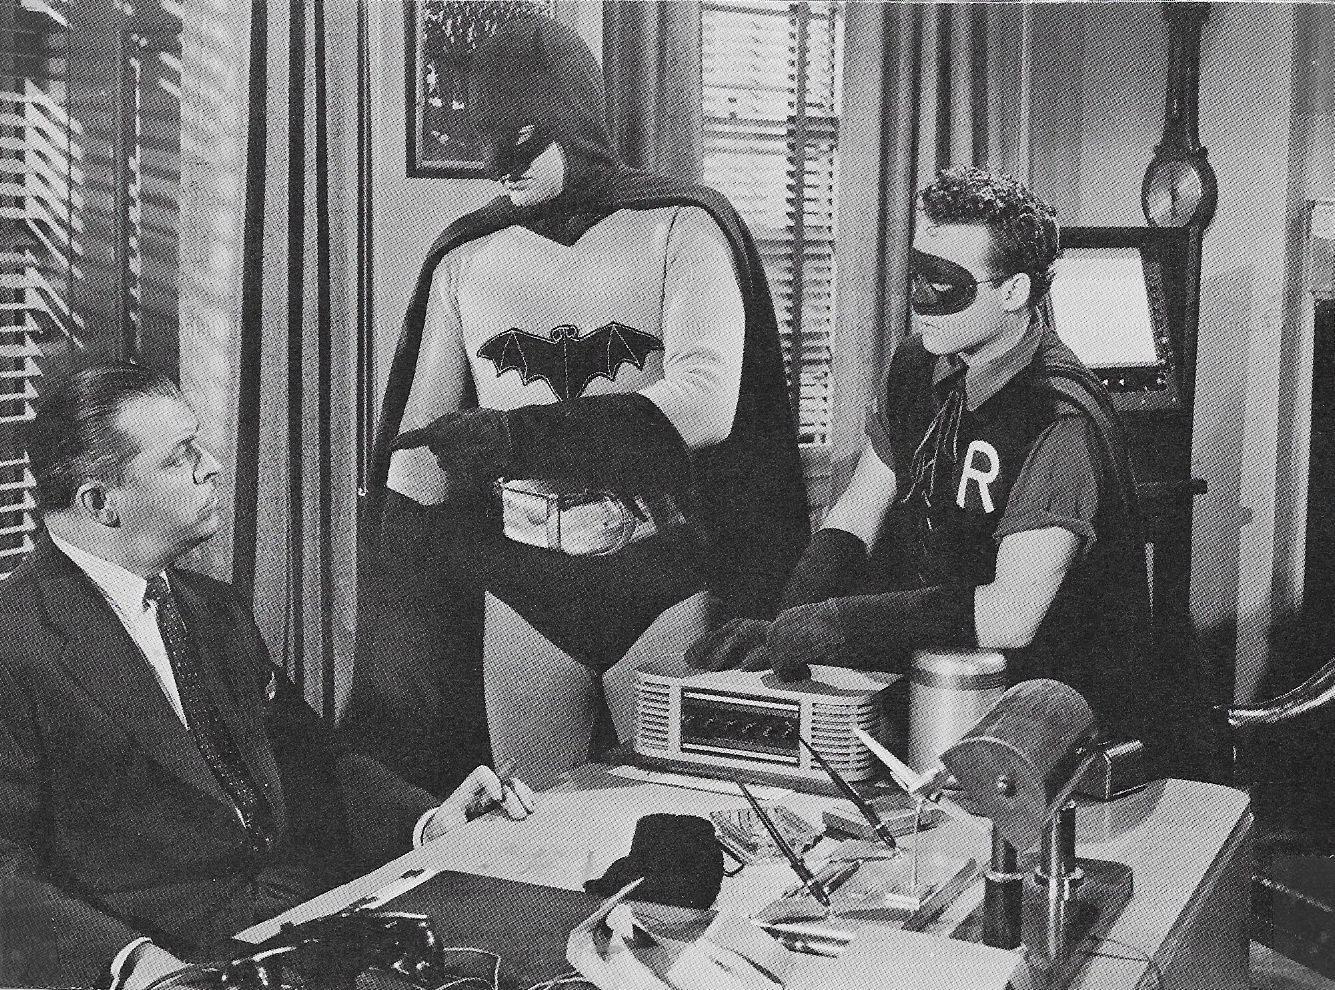 12. Johnny Duncan, Batman and Robin (1949)